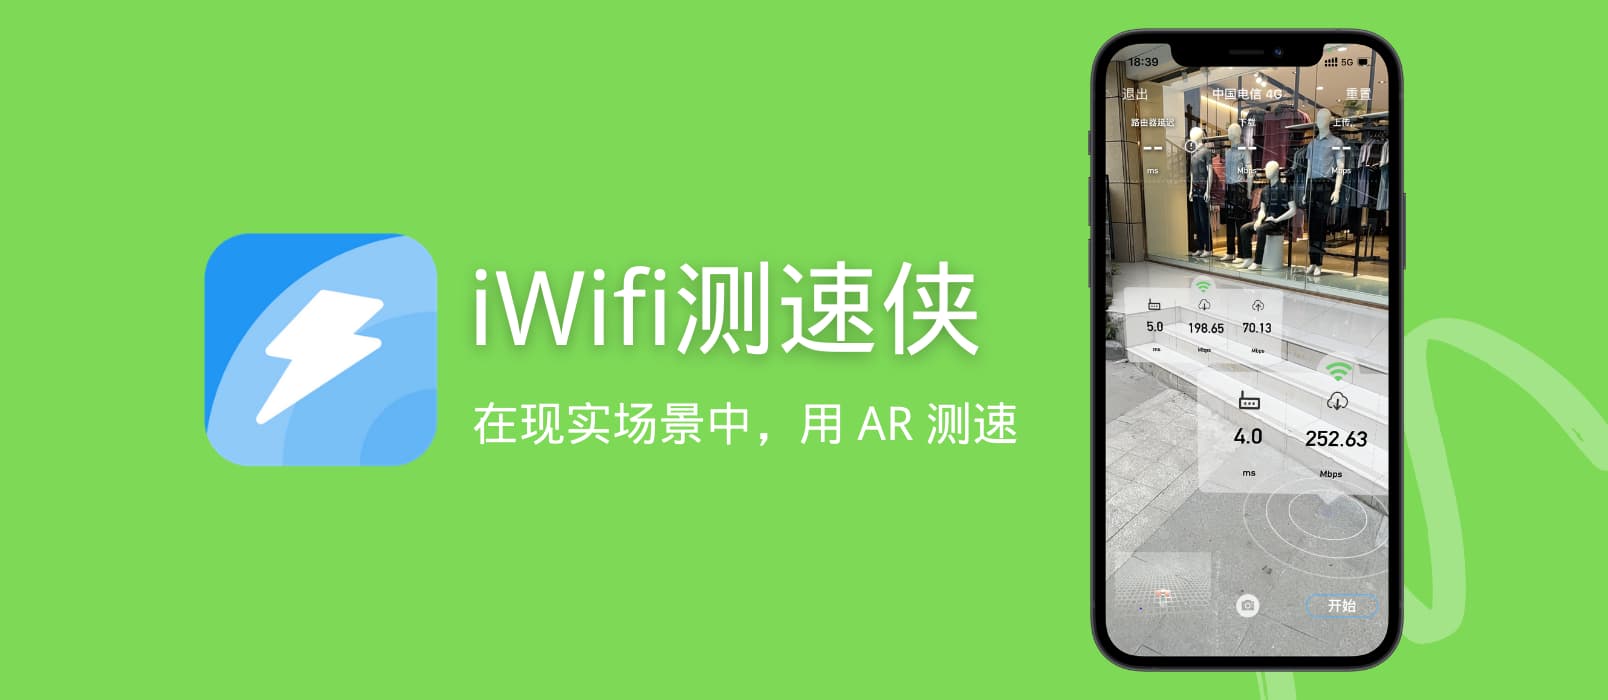 iWifi 测速侠 - 在现实场景中，用 AR 测速[macOS/iOS 限免]